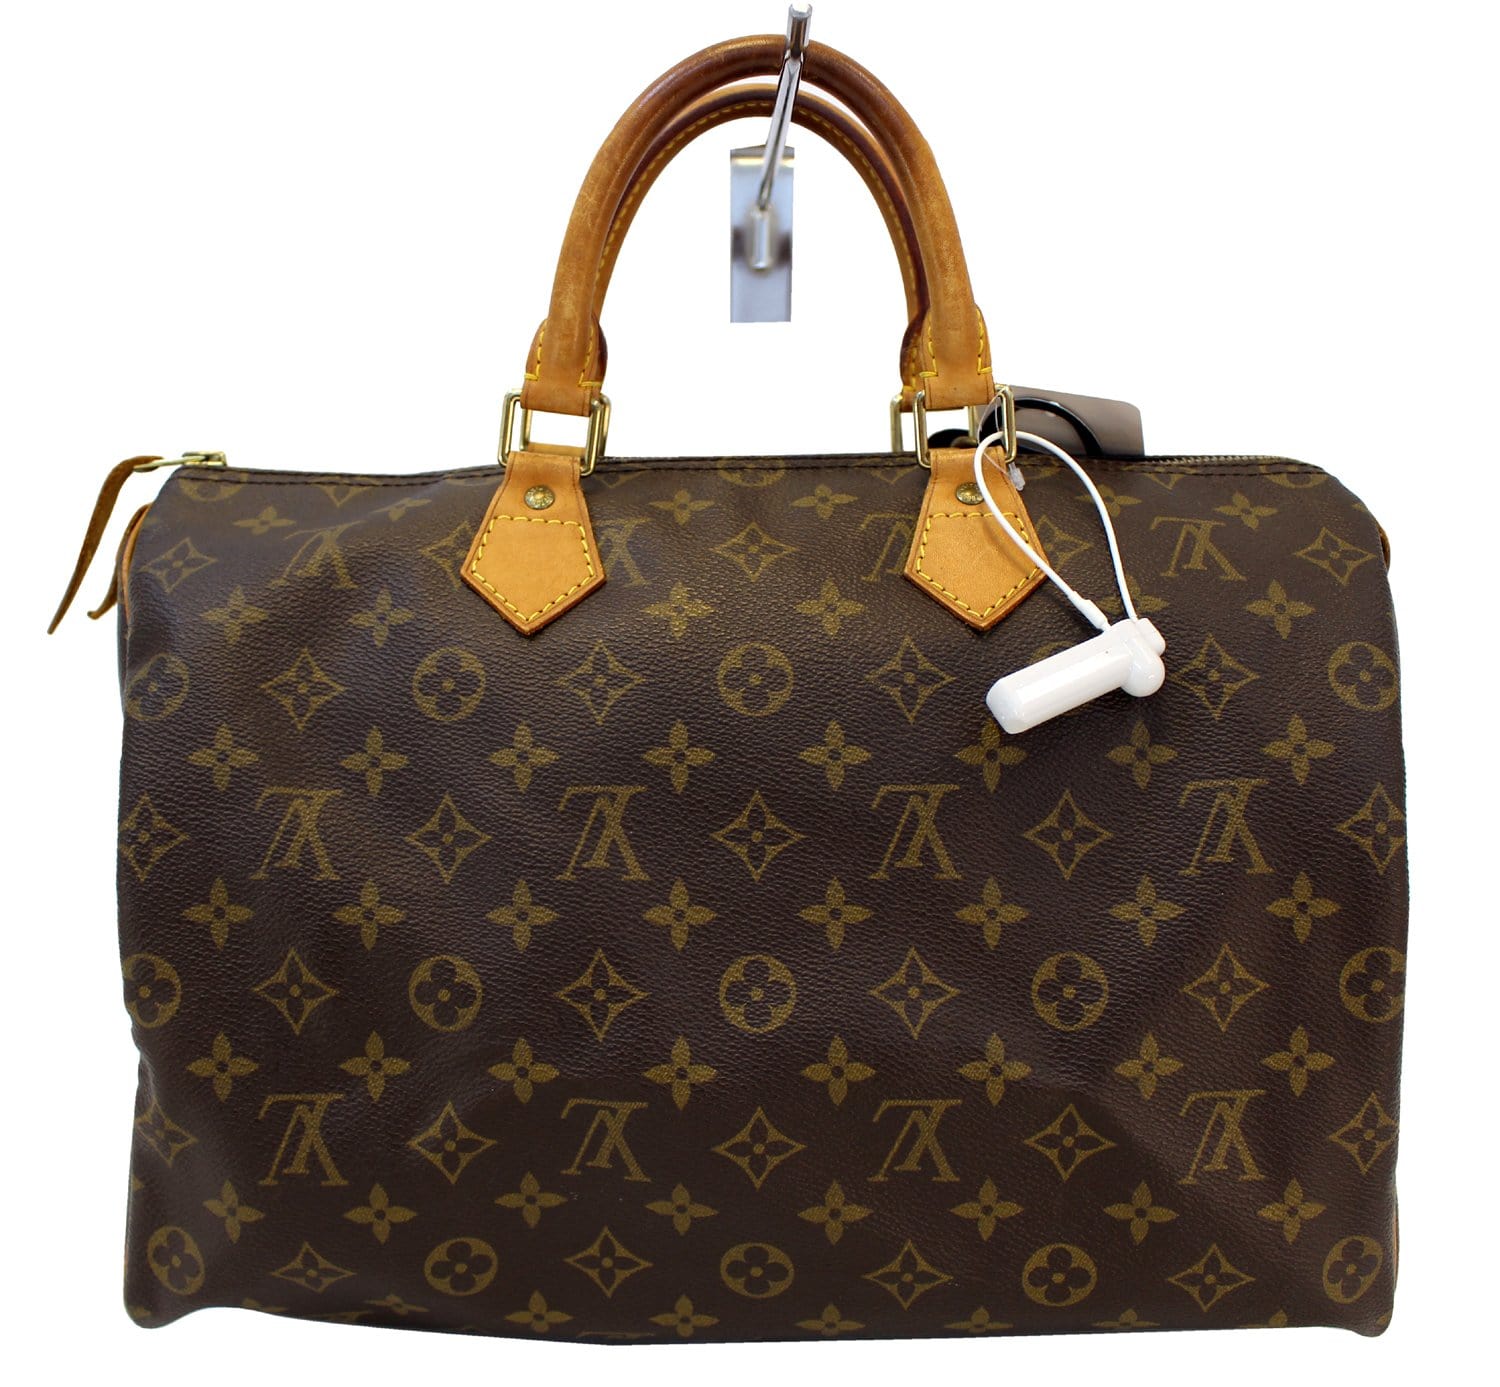 LOUIS VUITTON Monogram Speedy 35 Handbag